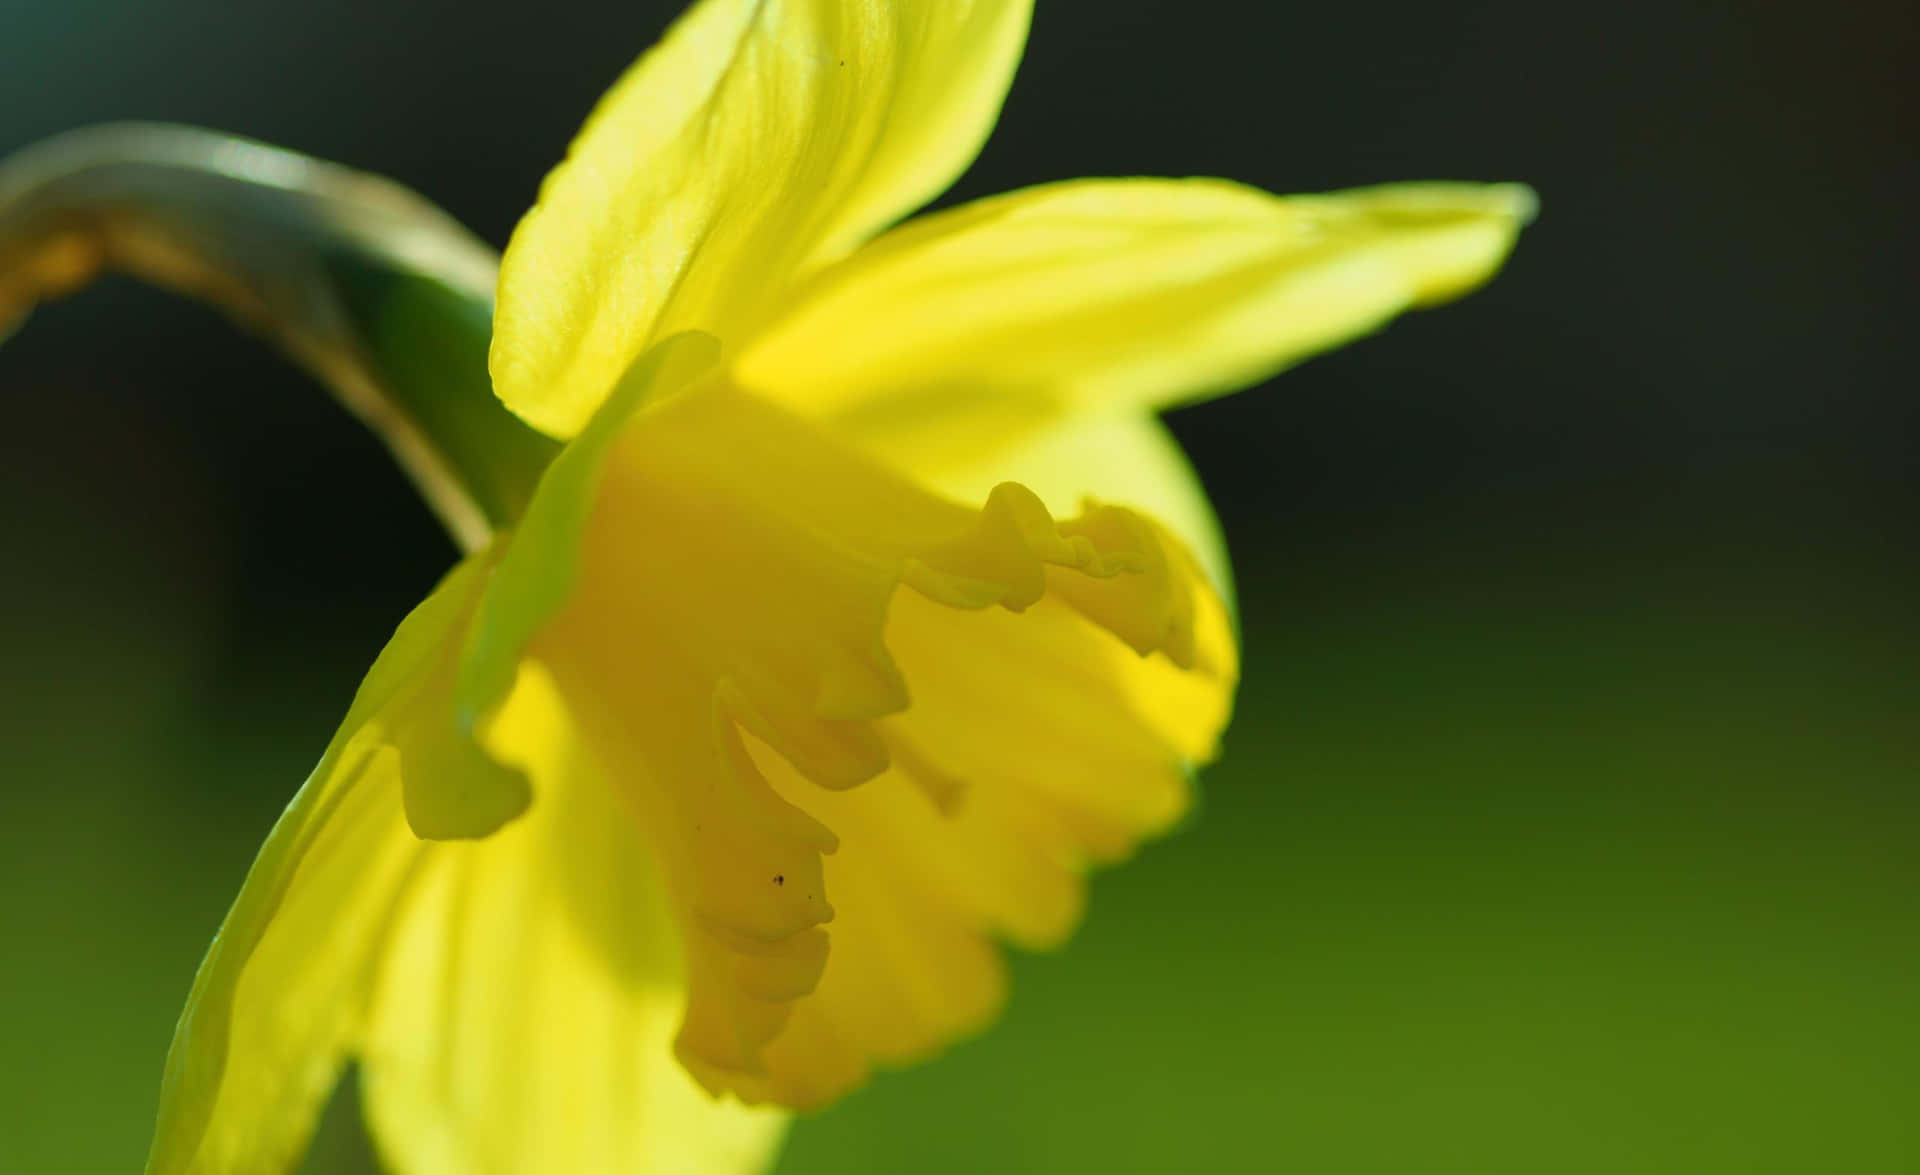 Caption: Vibrant Yellow Daffodils in Full Bloom Wallpaper